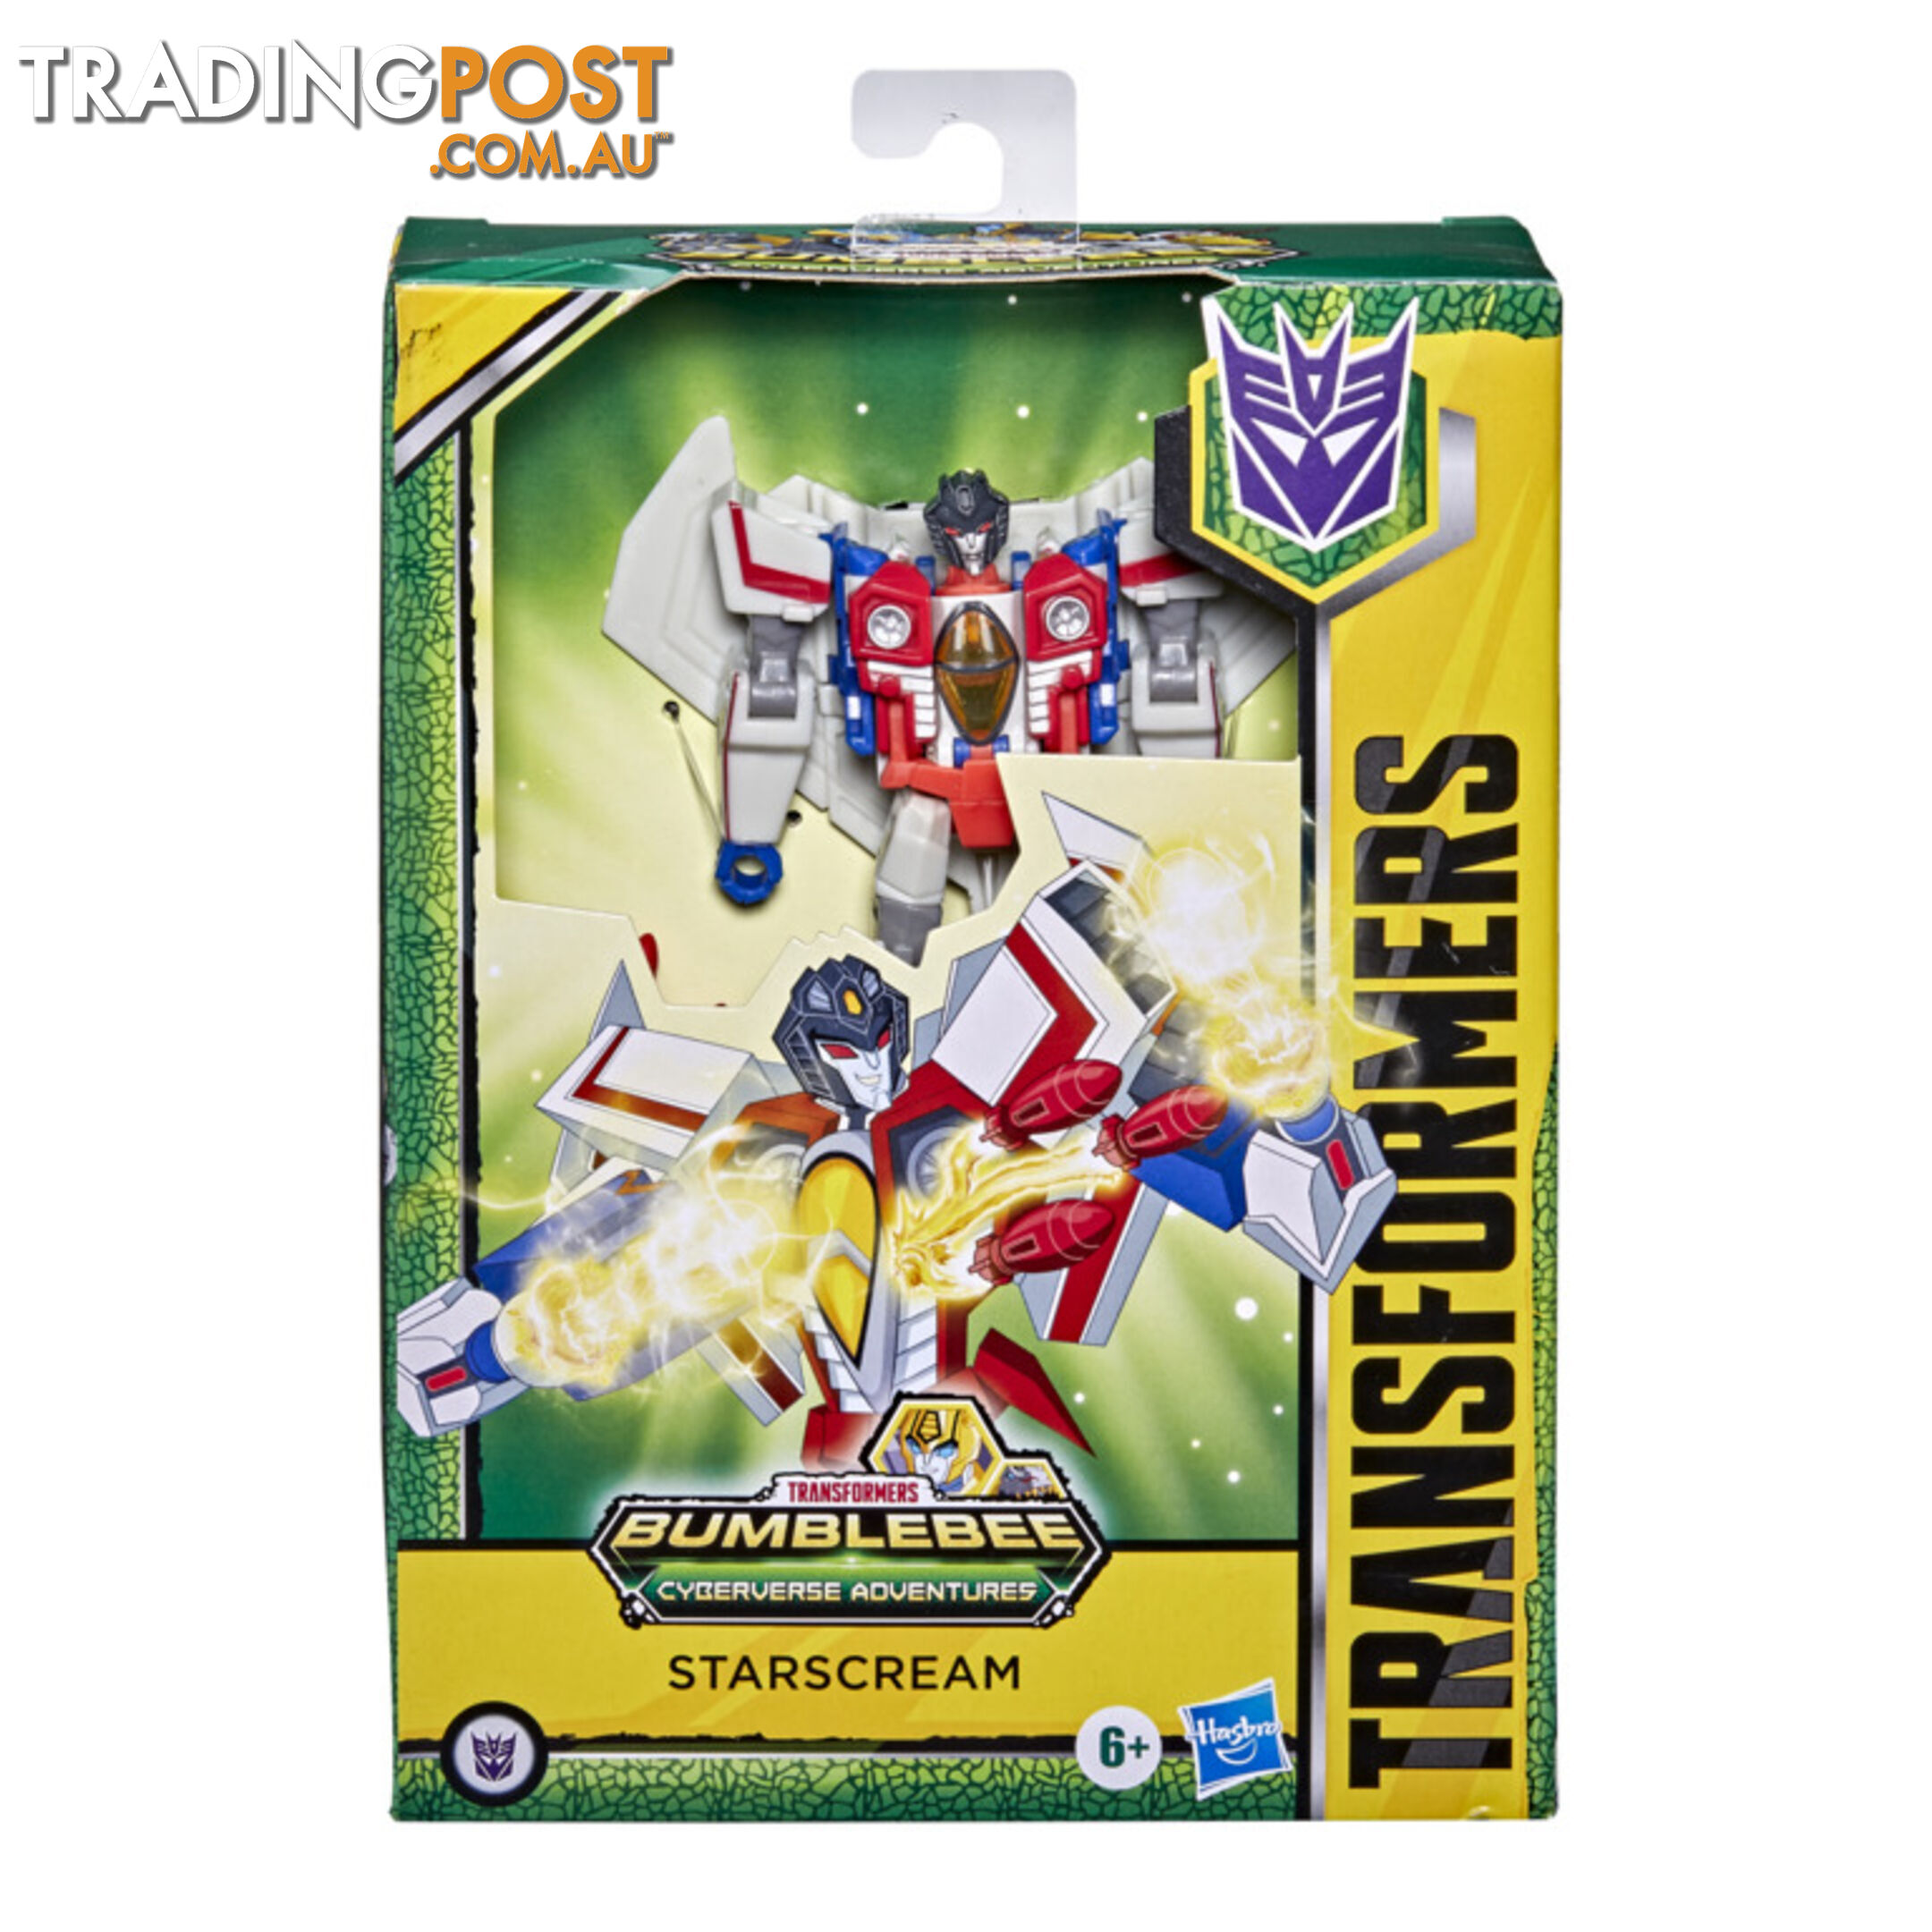 Transformers Bumblebee Cyberverse Adventures Toys Deluxe Starscream - Hbe70535f0507 - 5010993866885